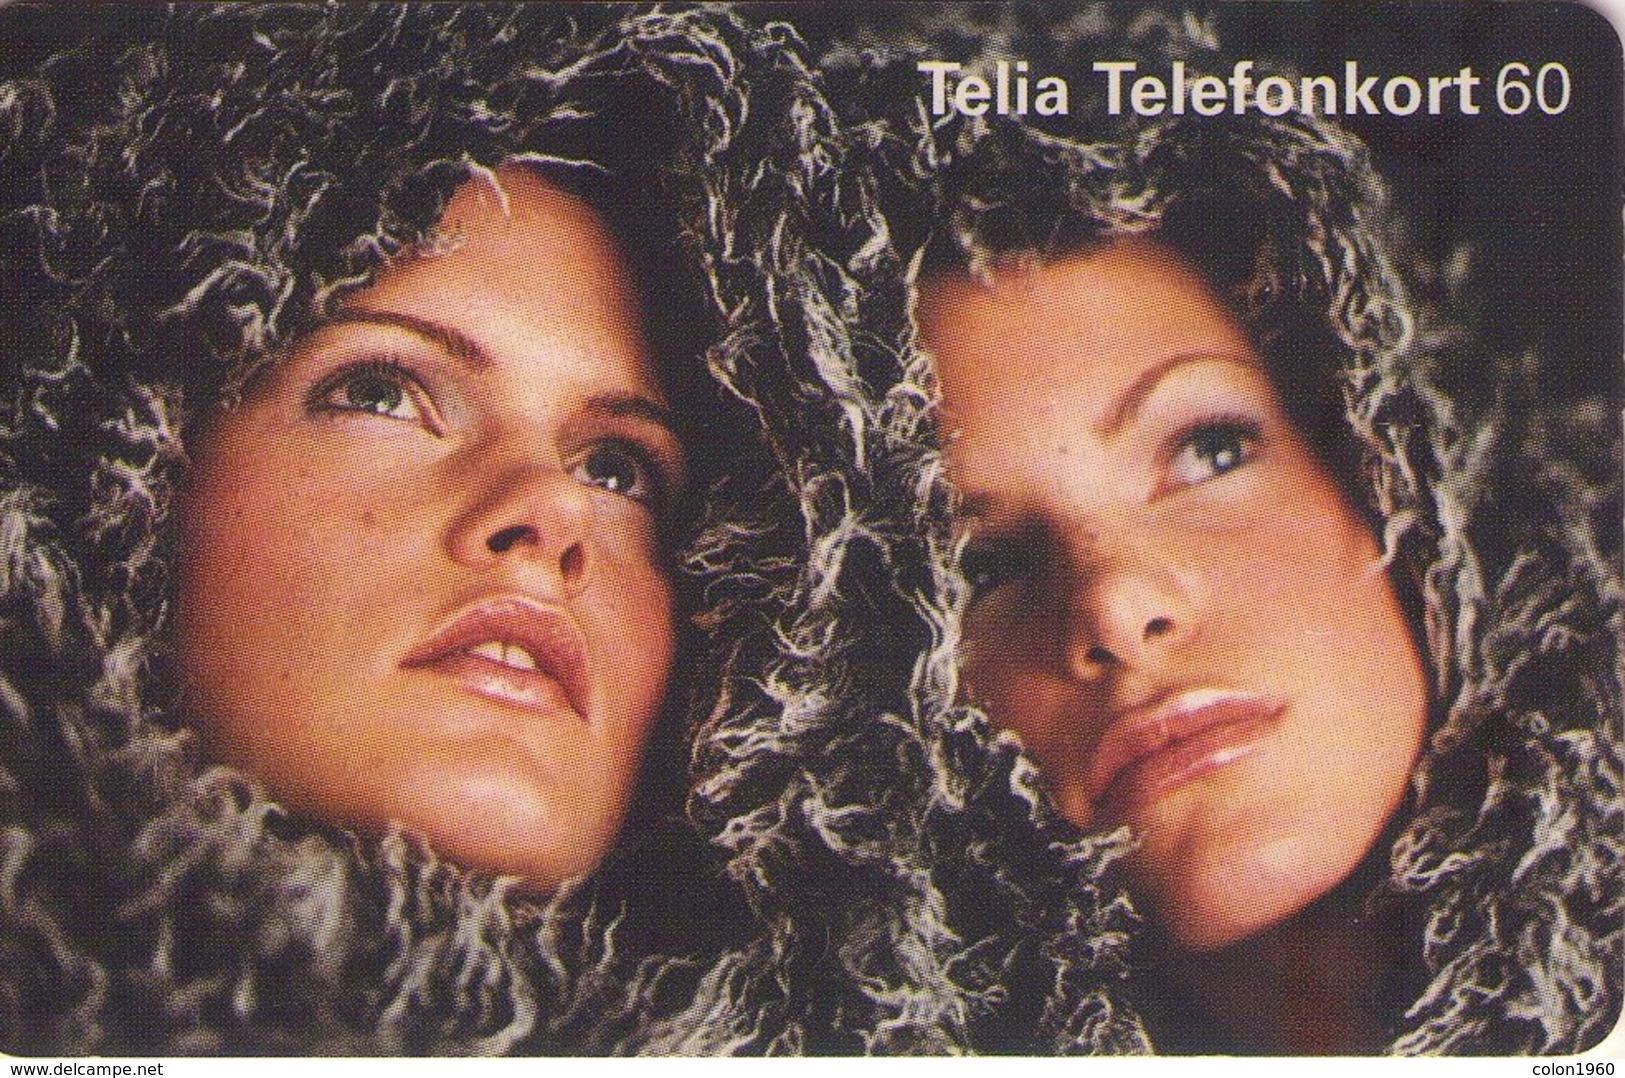 SUECIA. SE-TEL-060-0112. Twins. 02-2000. (466) - Sweden